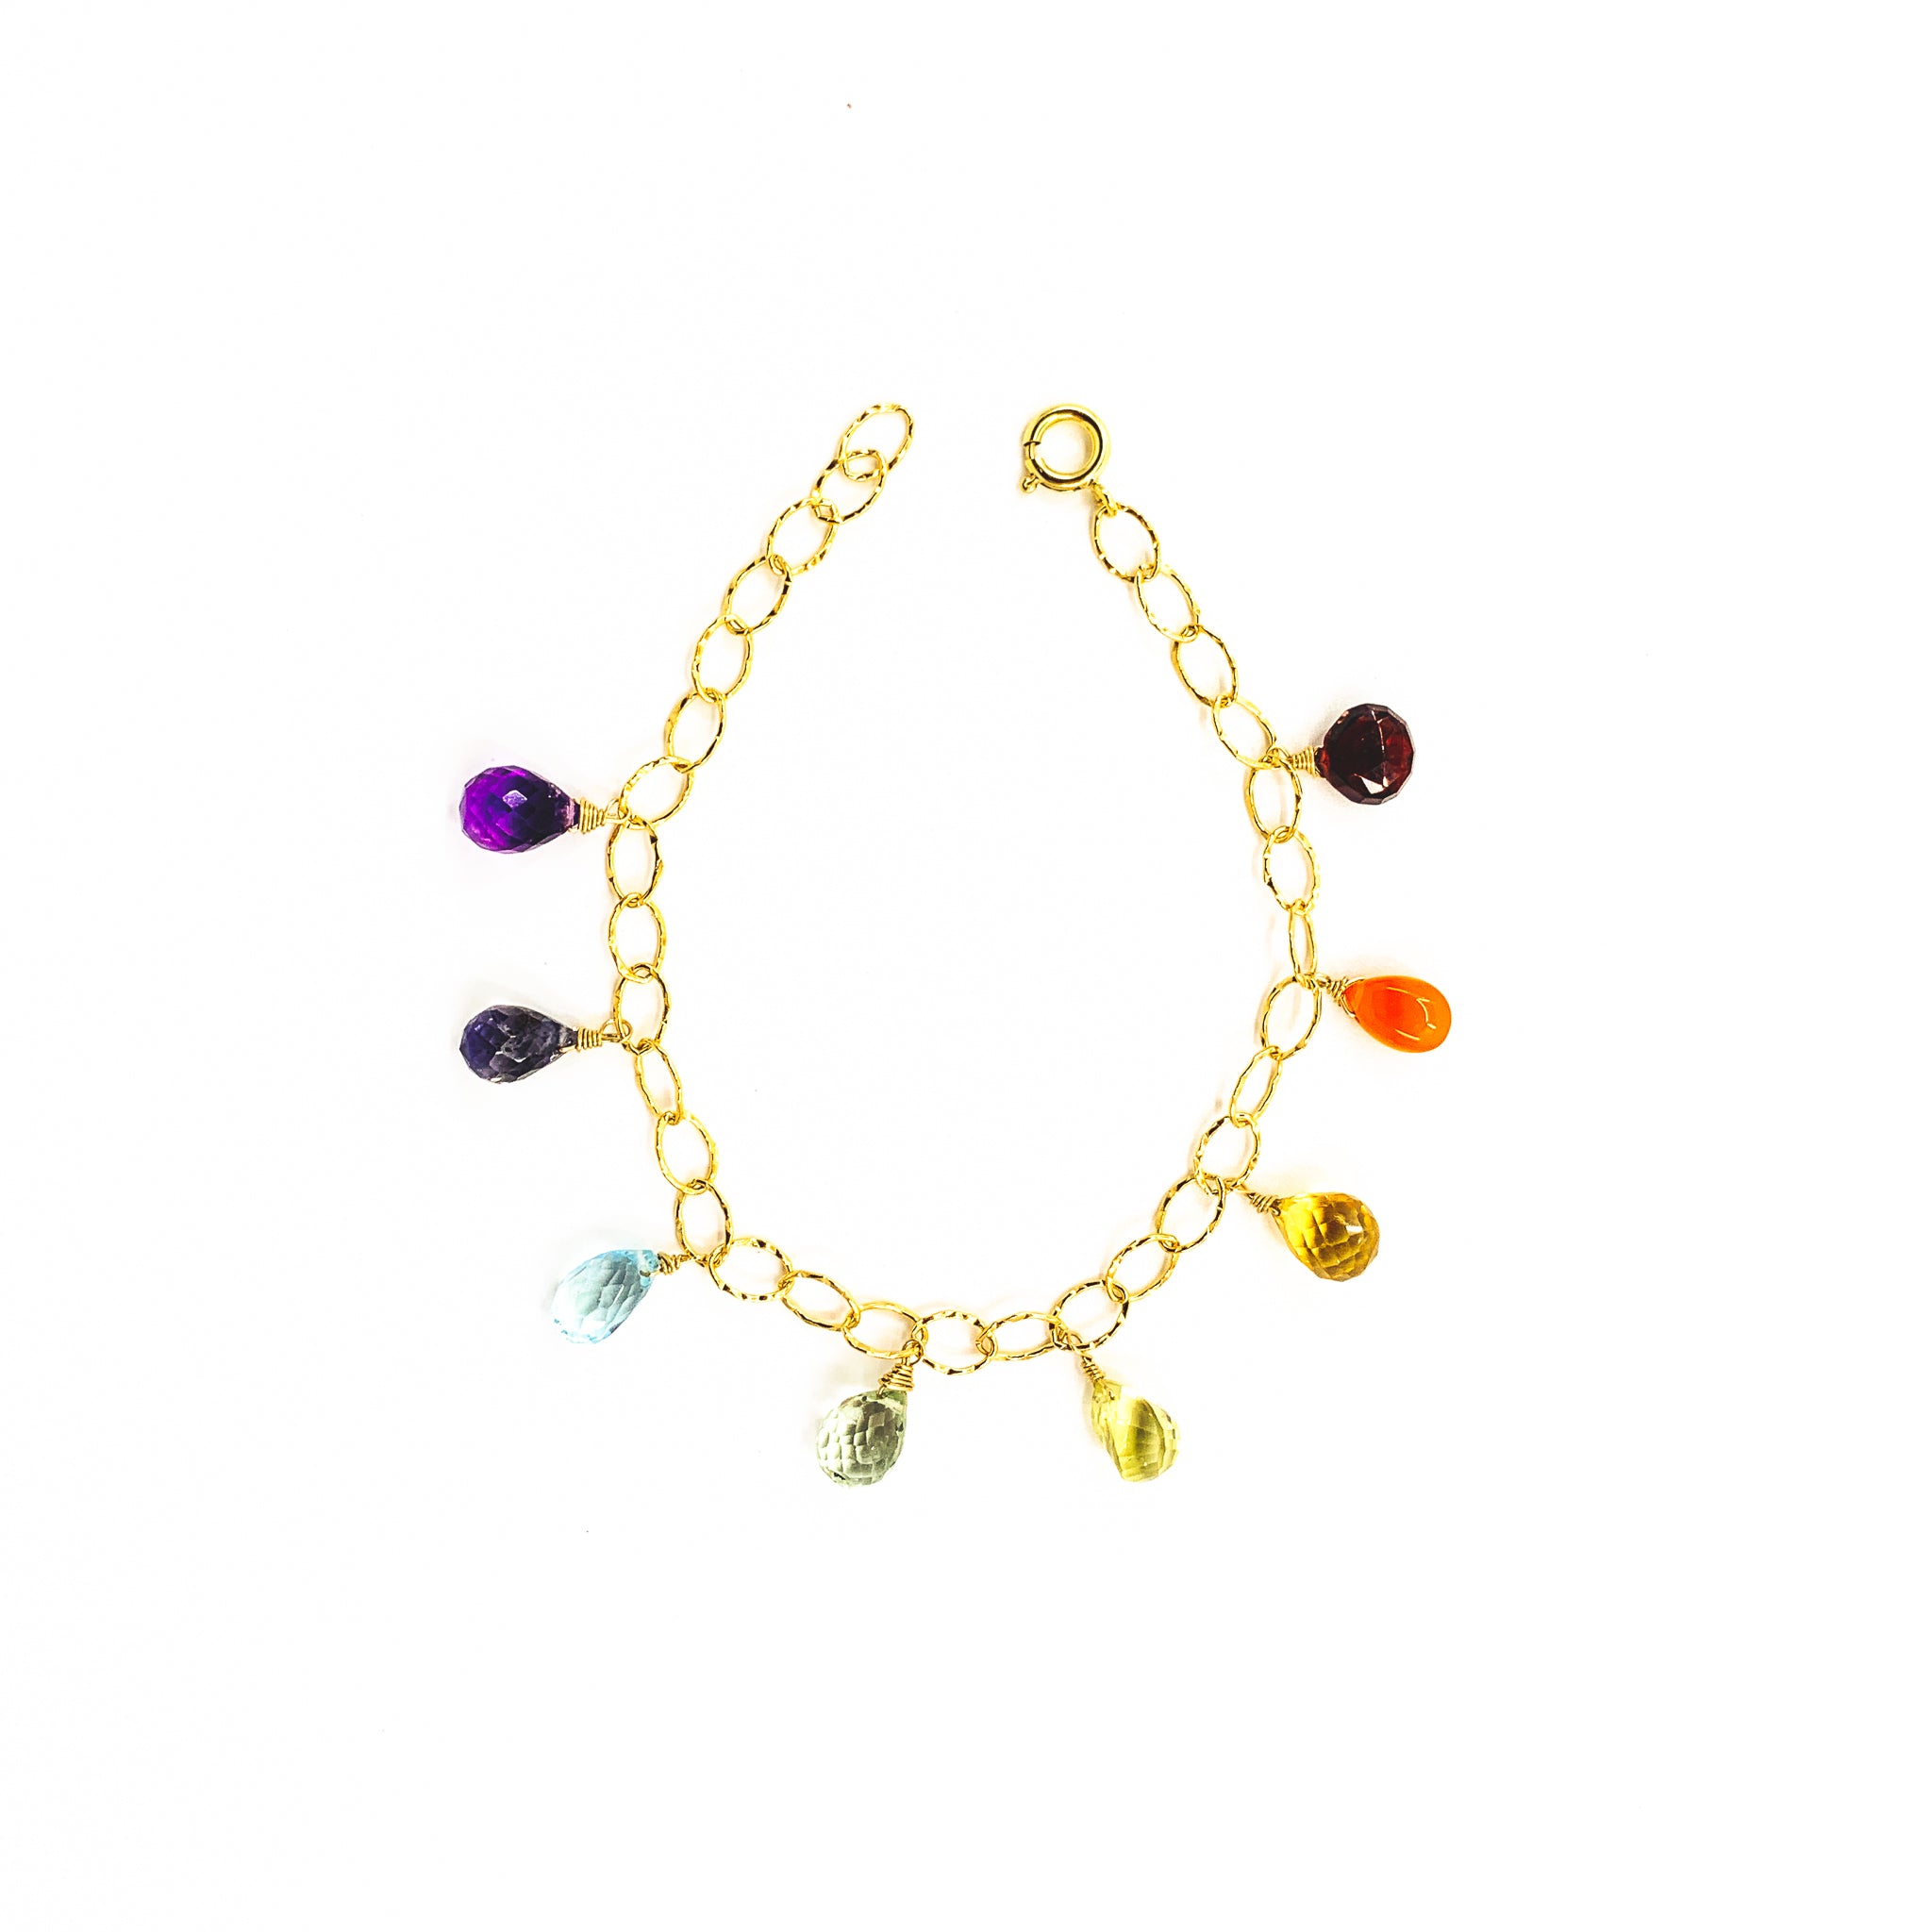 rainbow gemstones gold charm bracelet by eve black jewelry made in Hawaii